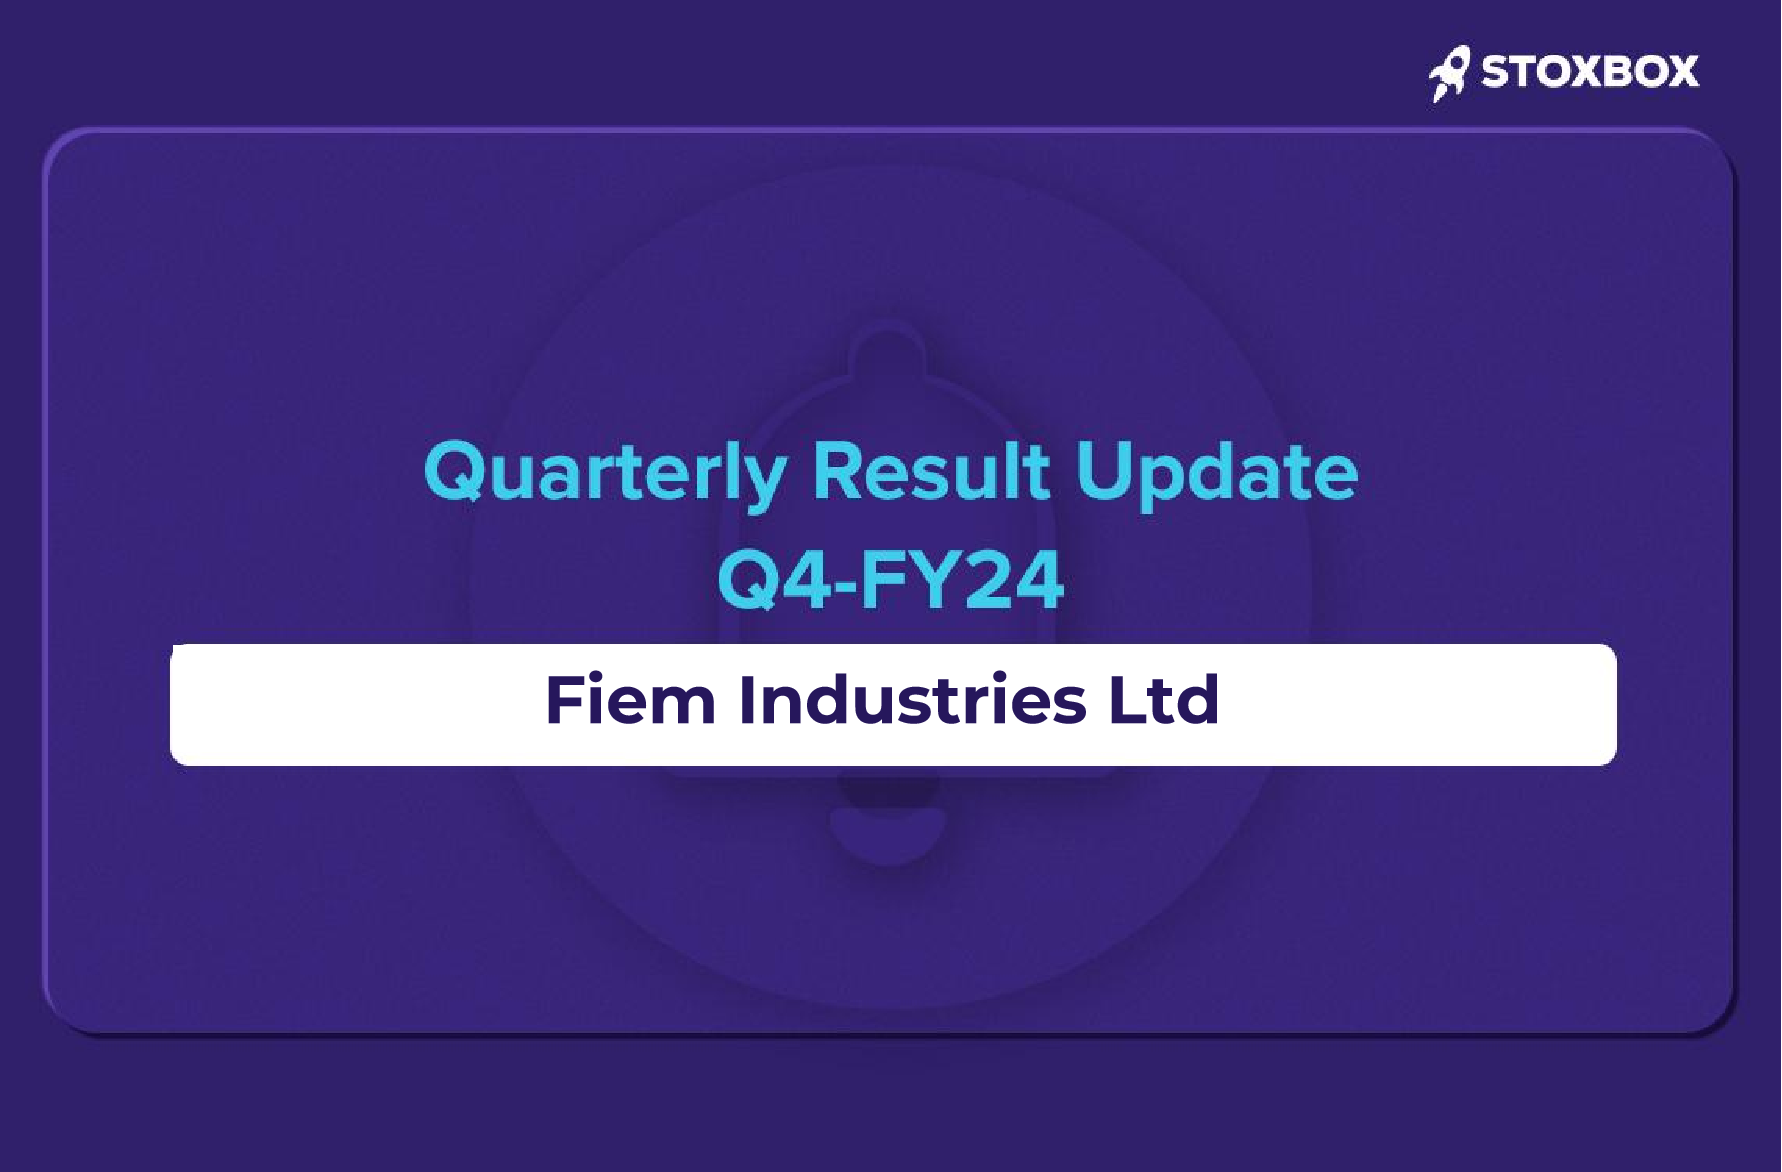 fiem industries results update